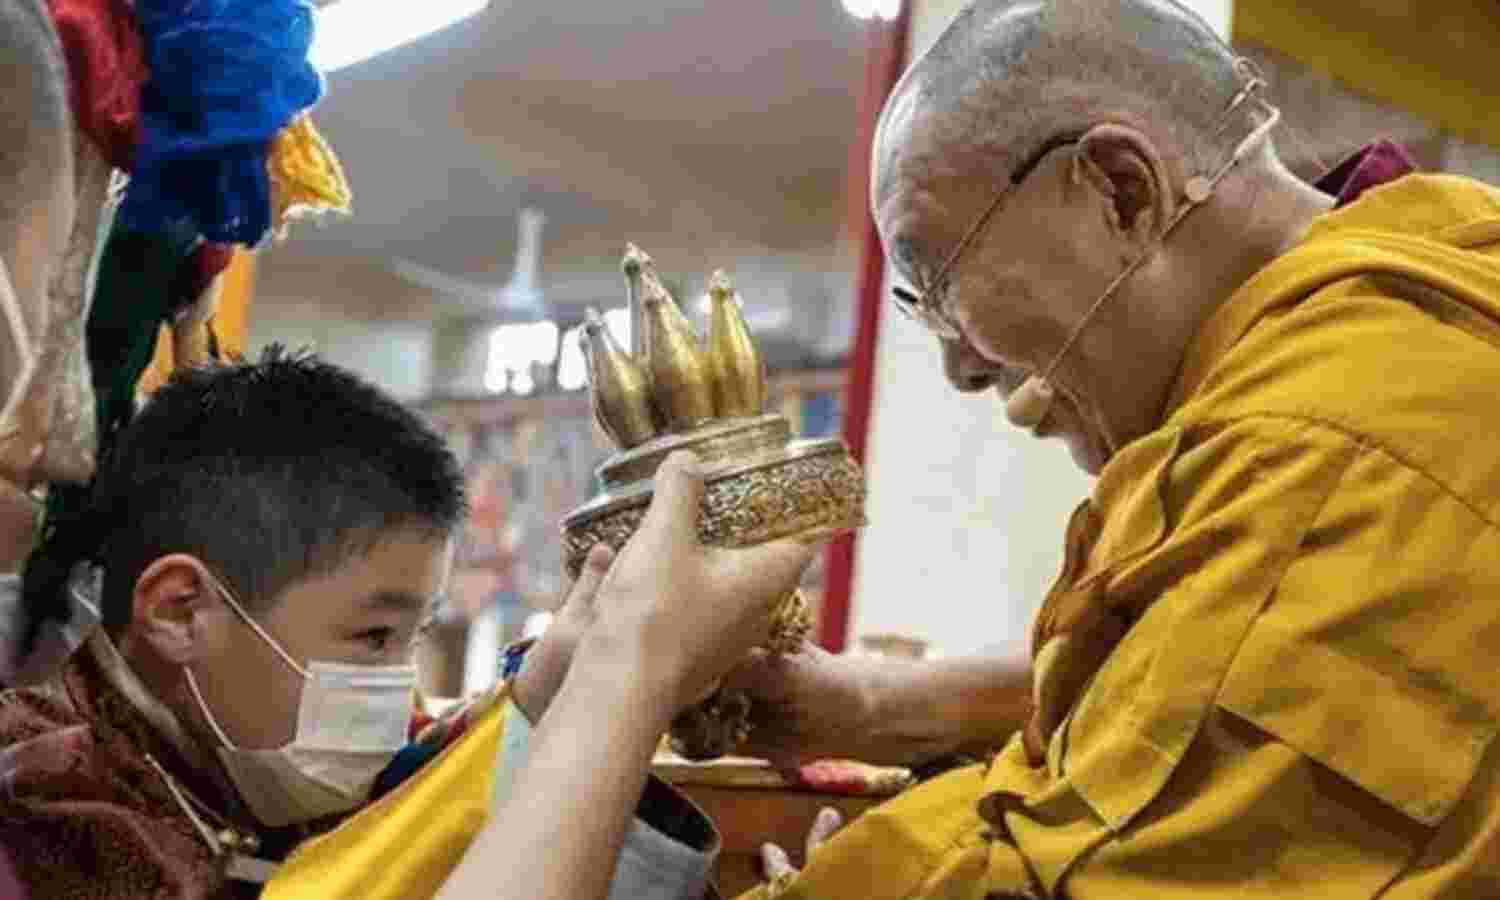 Dalai Lama names Mongolian boy as 3rd highest leader in Buddhism